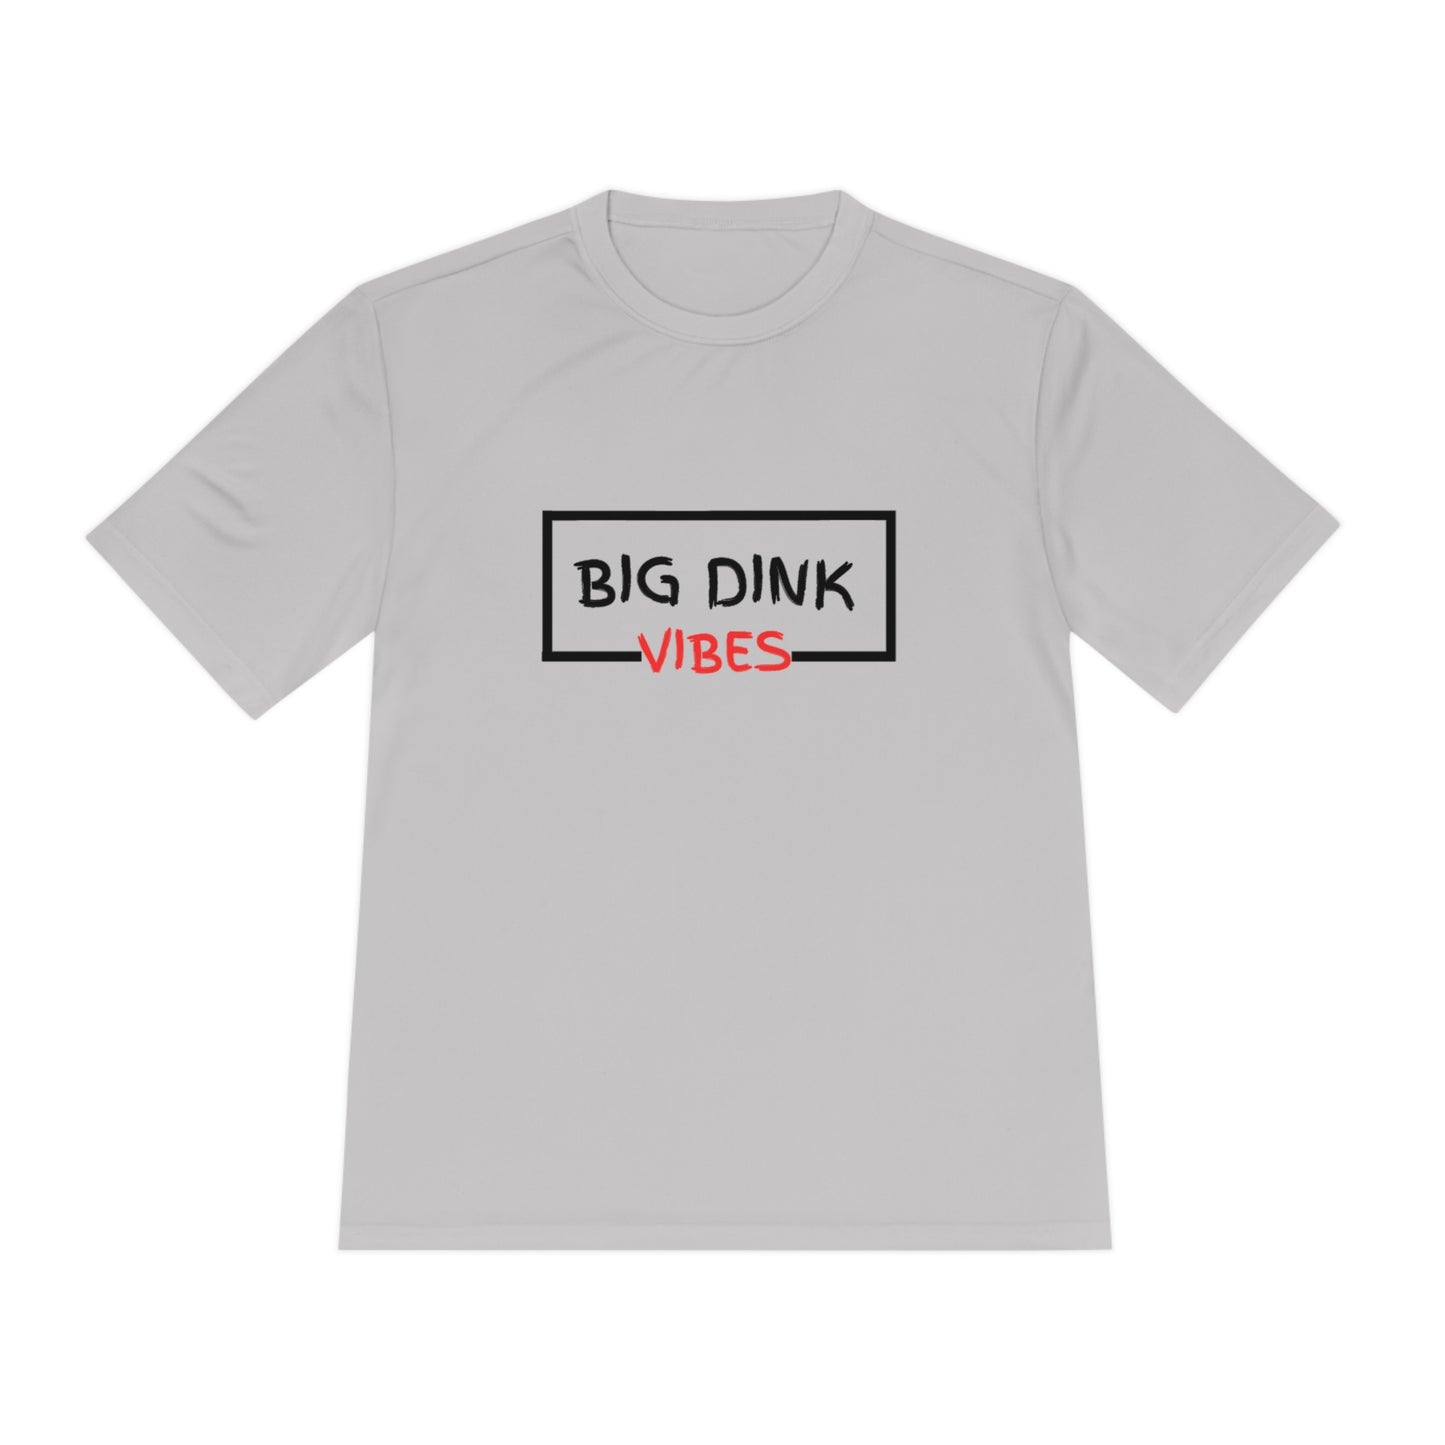 Men's Performance Moisture Wicking T-shirt Big Dink Vibes